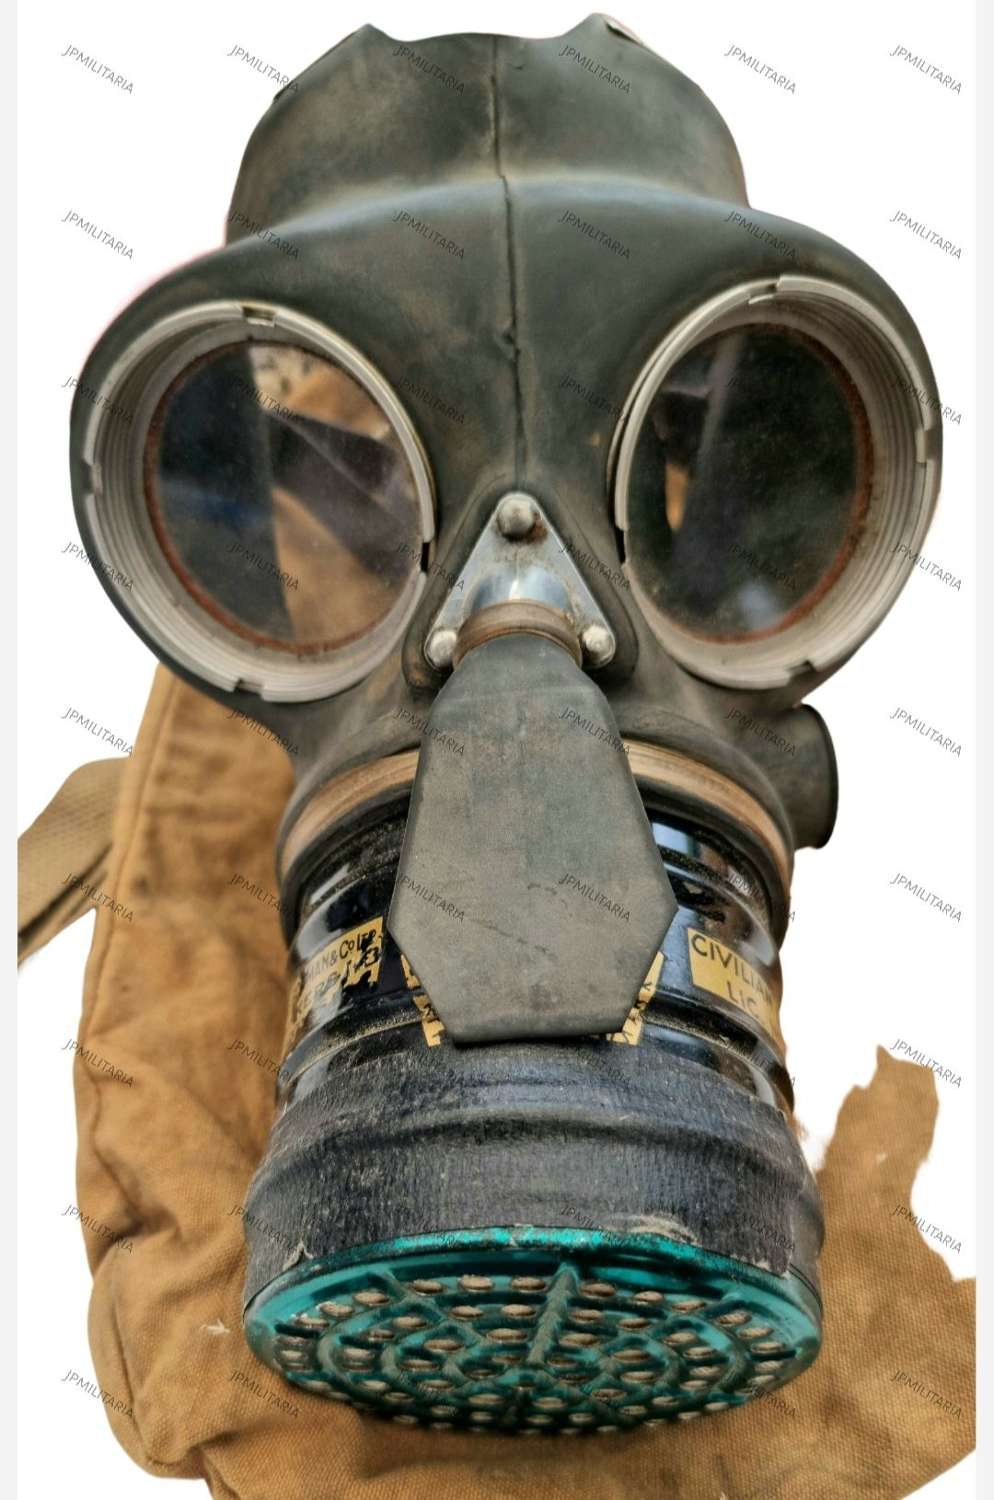 WW2 British Civil defence gas mask and bag